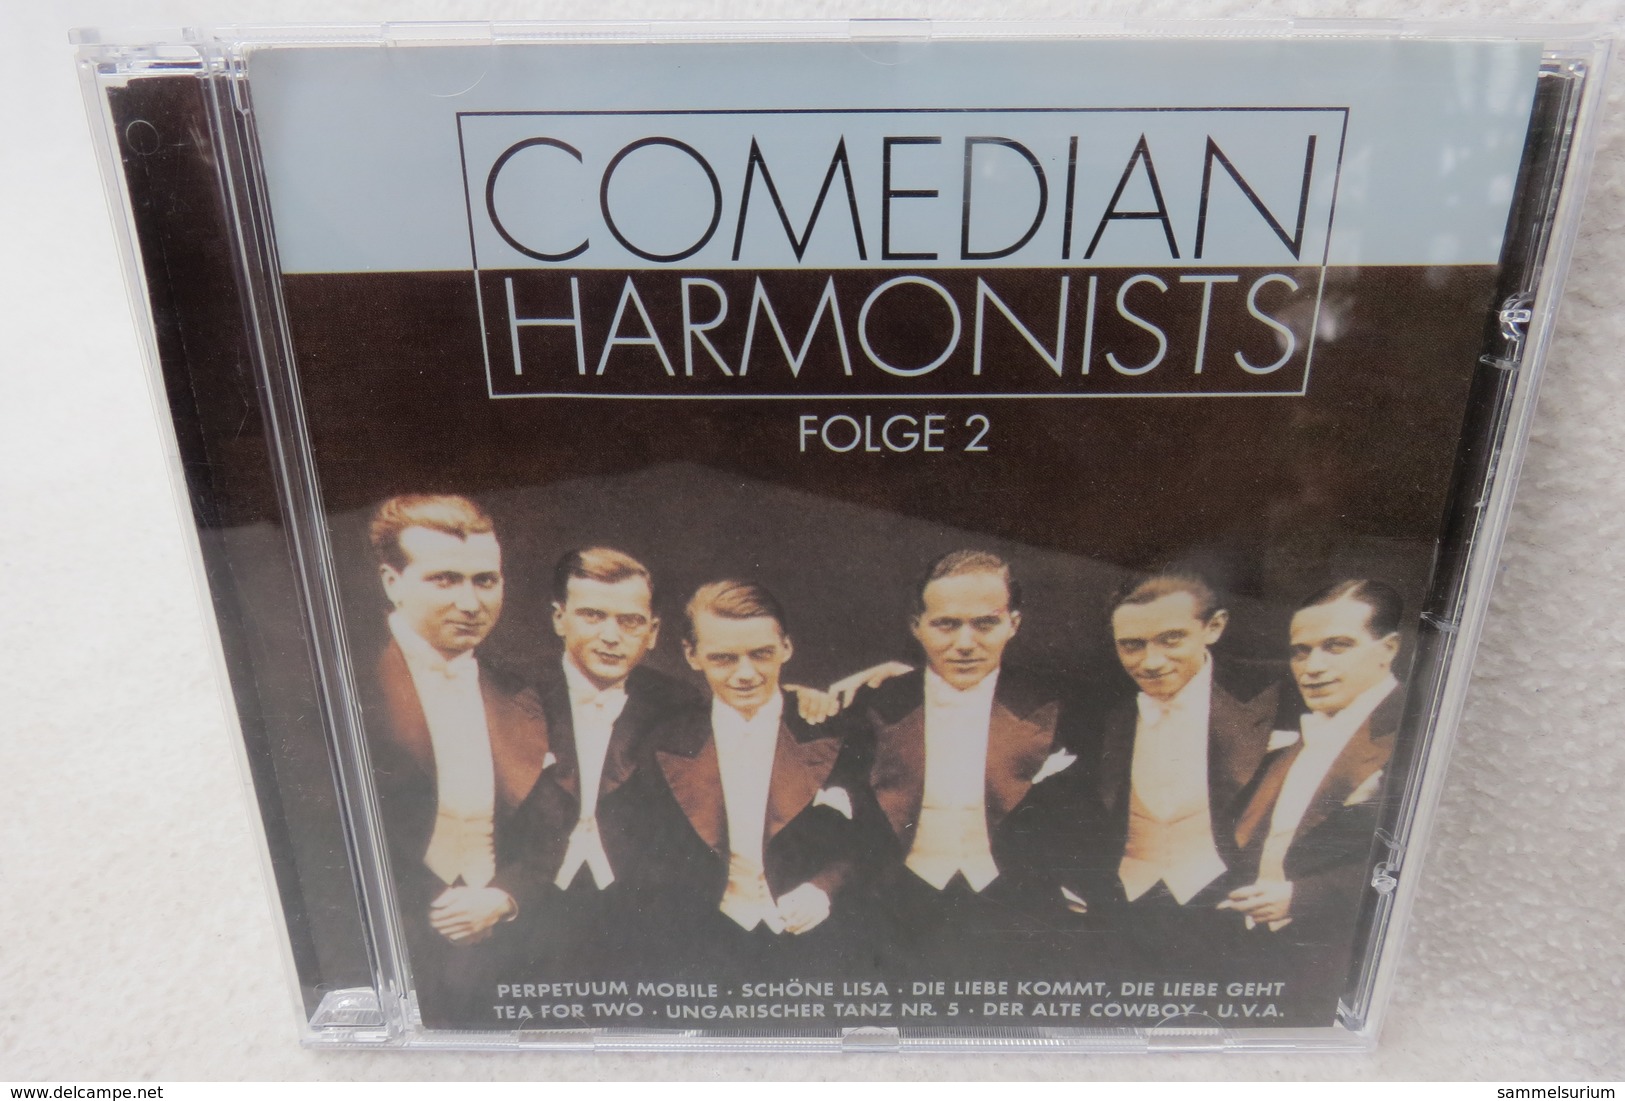 2 CDs "Comedian Harmonists"